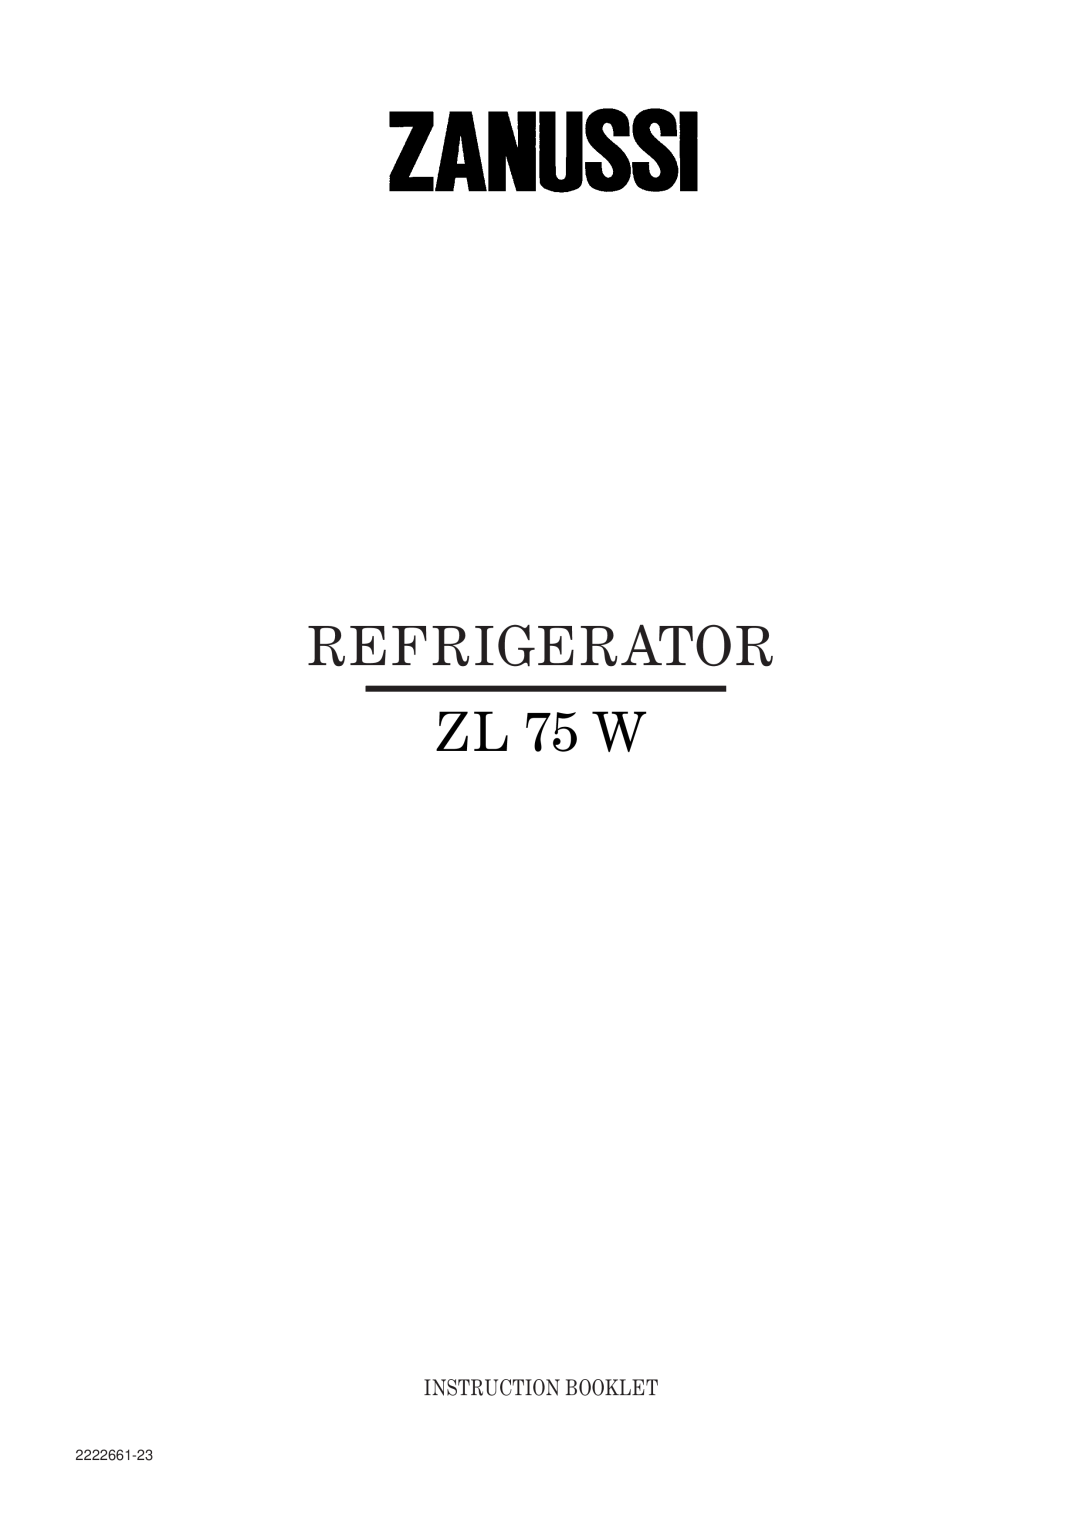 Zanussi ZL 75 W manual Refrigerator, Instruction Booklet, 2222661-23 